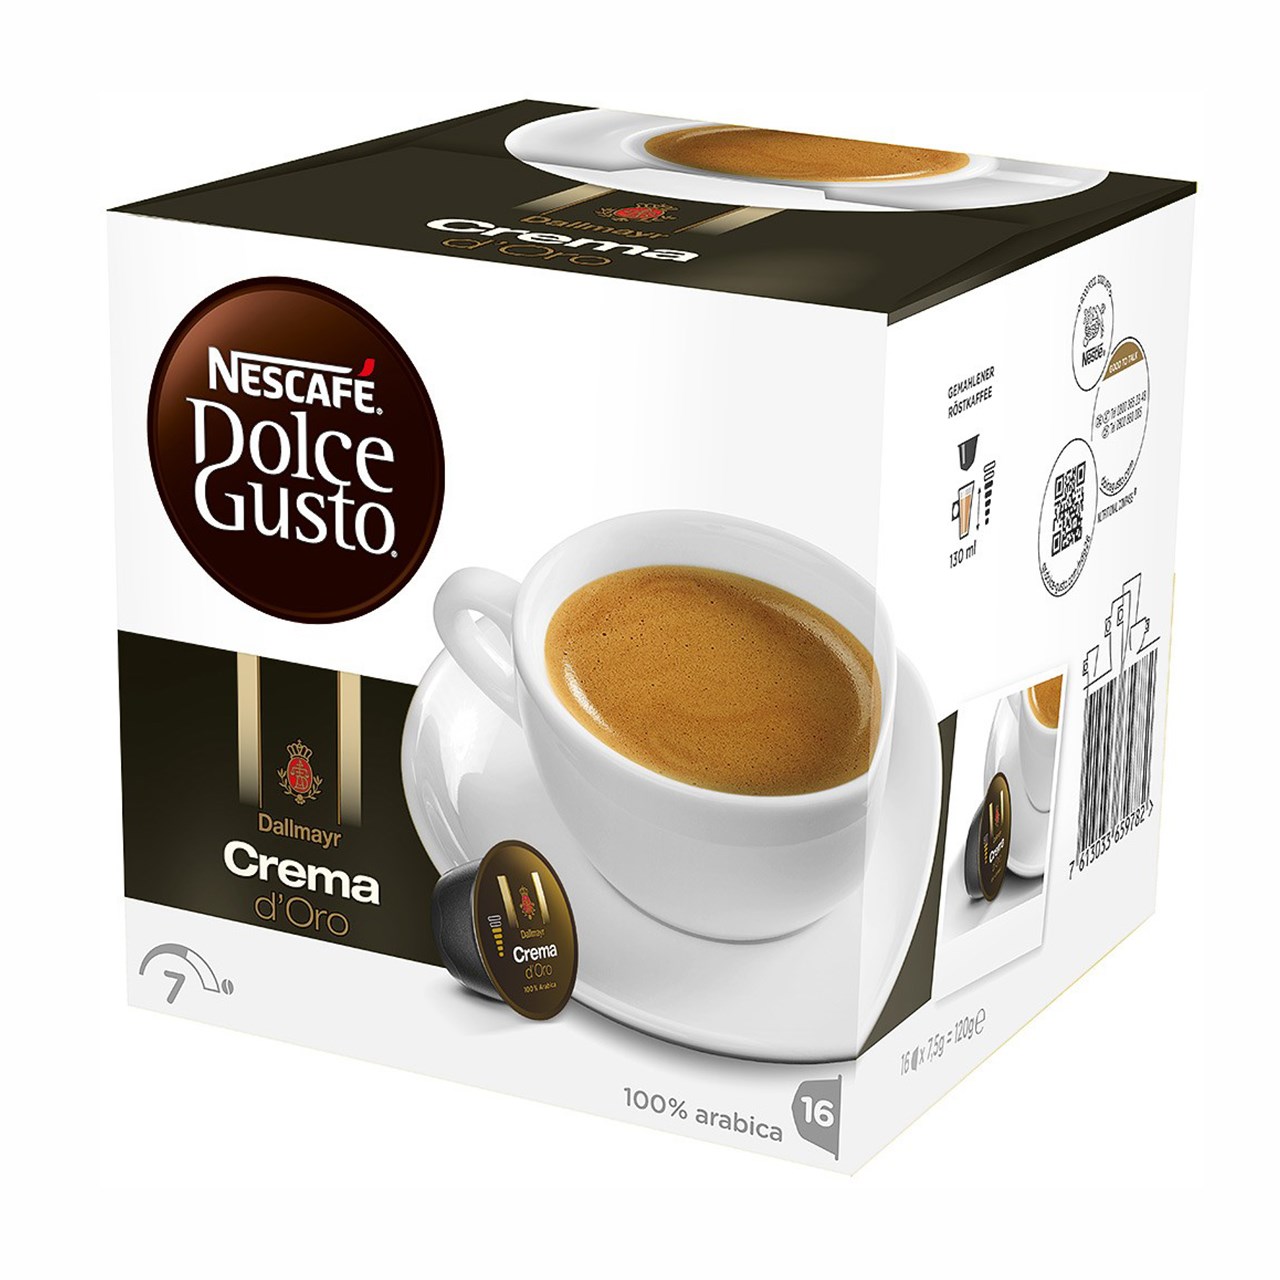 کپسول قهوه دولچه گوستو مدل Crema Doro